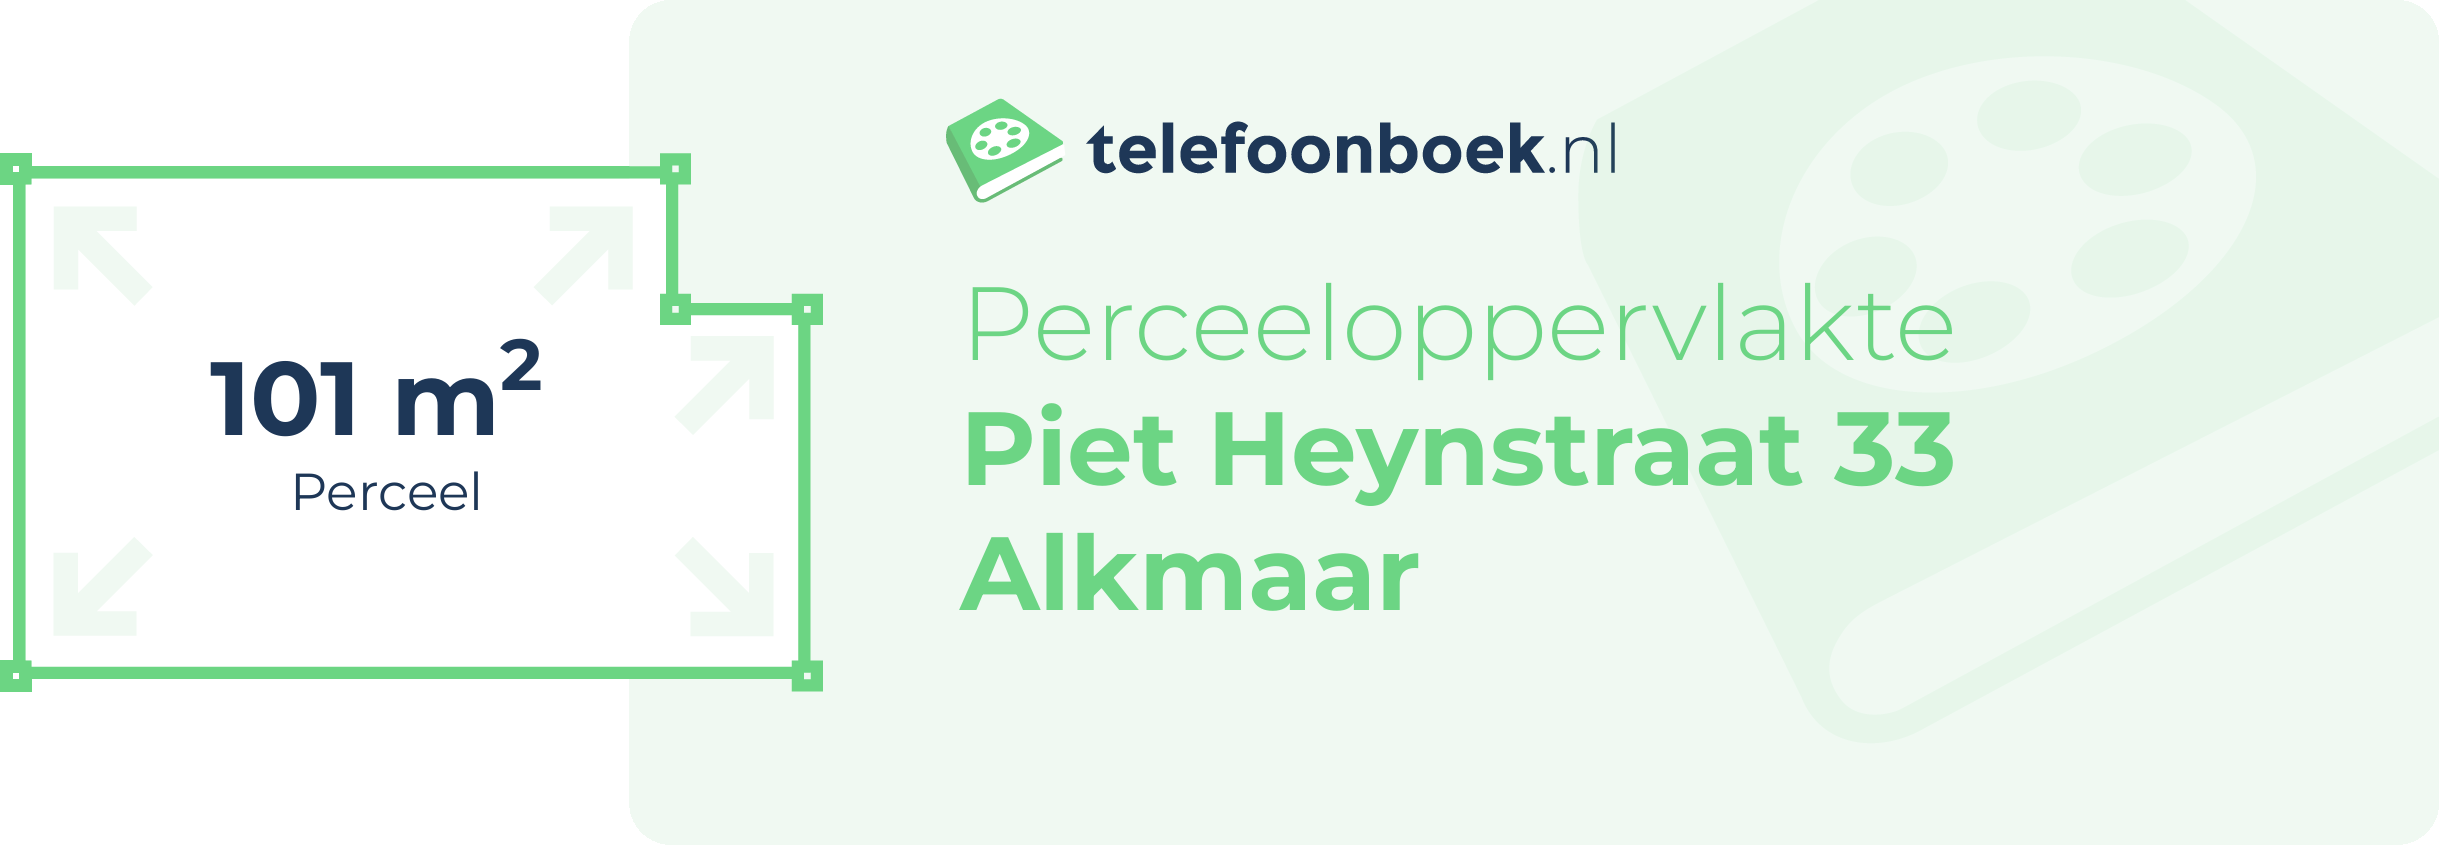 Perceeloppervlakte Piet Heynstraat 33 Alkmaar